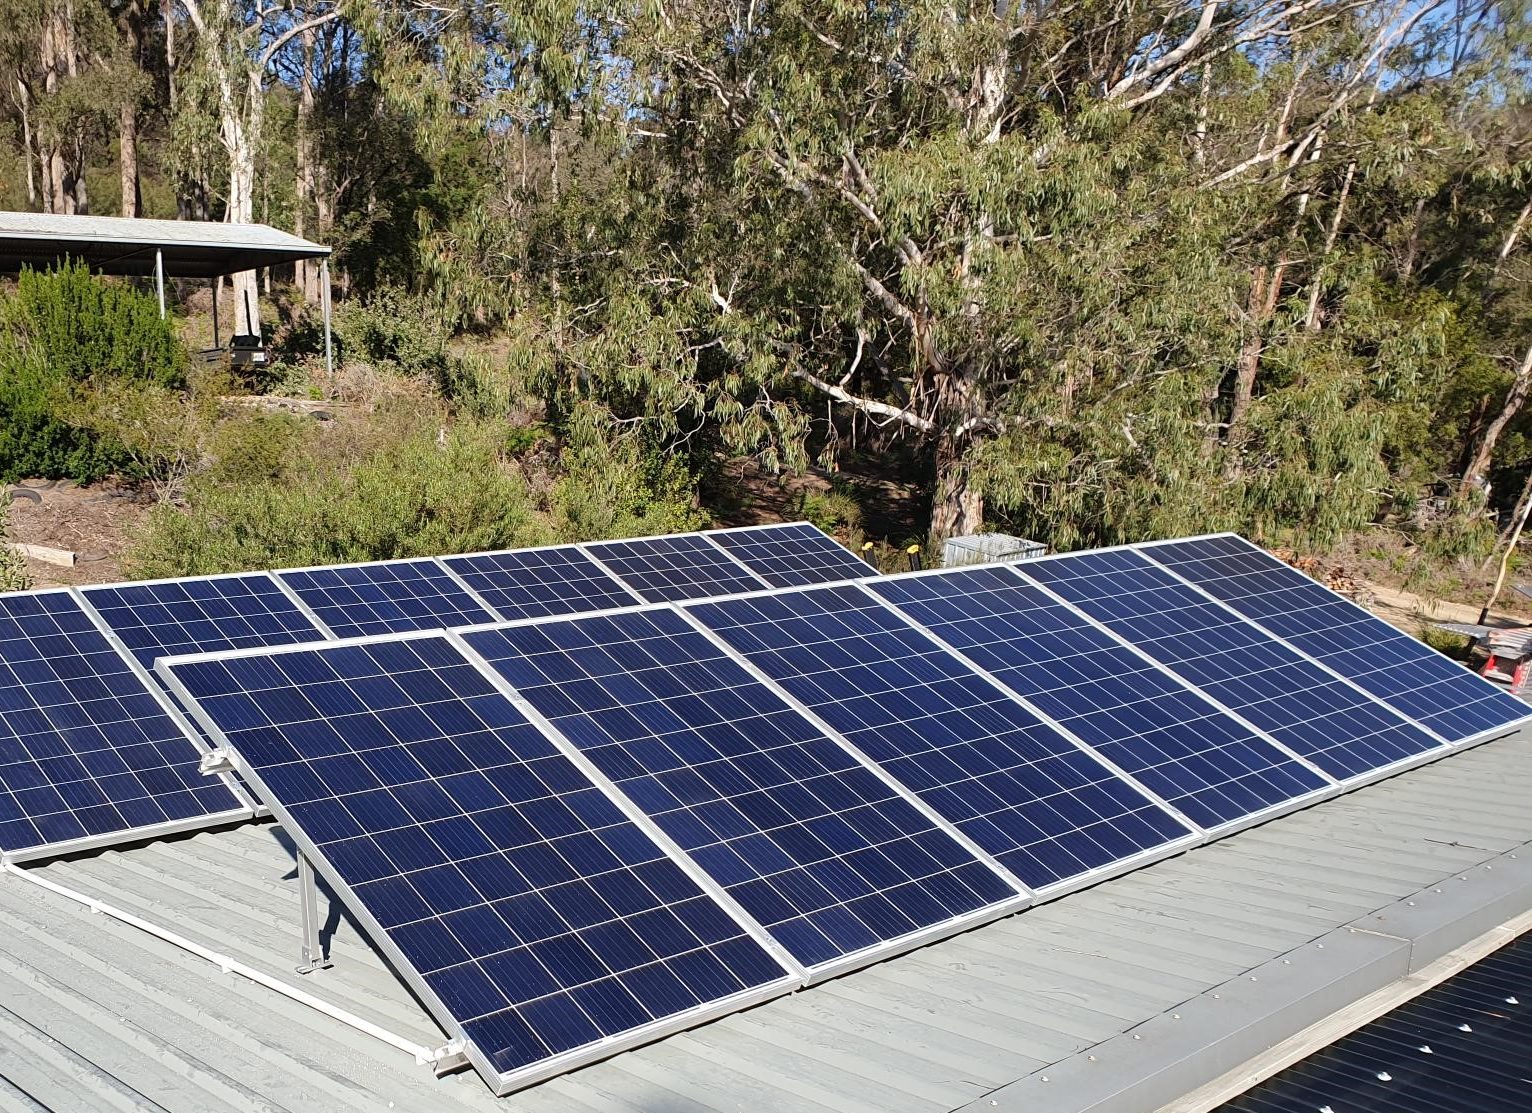 Christa's 3.24kW solar PV system